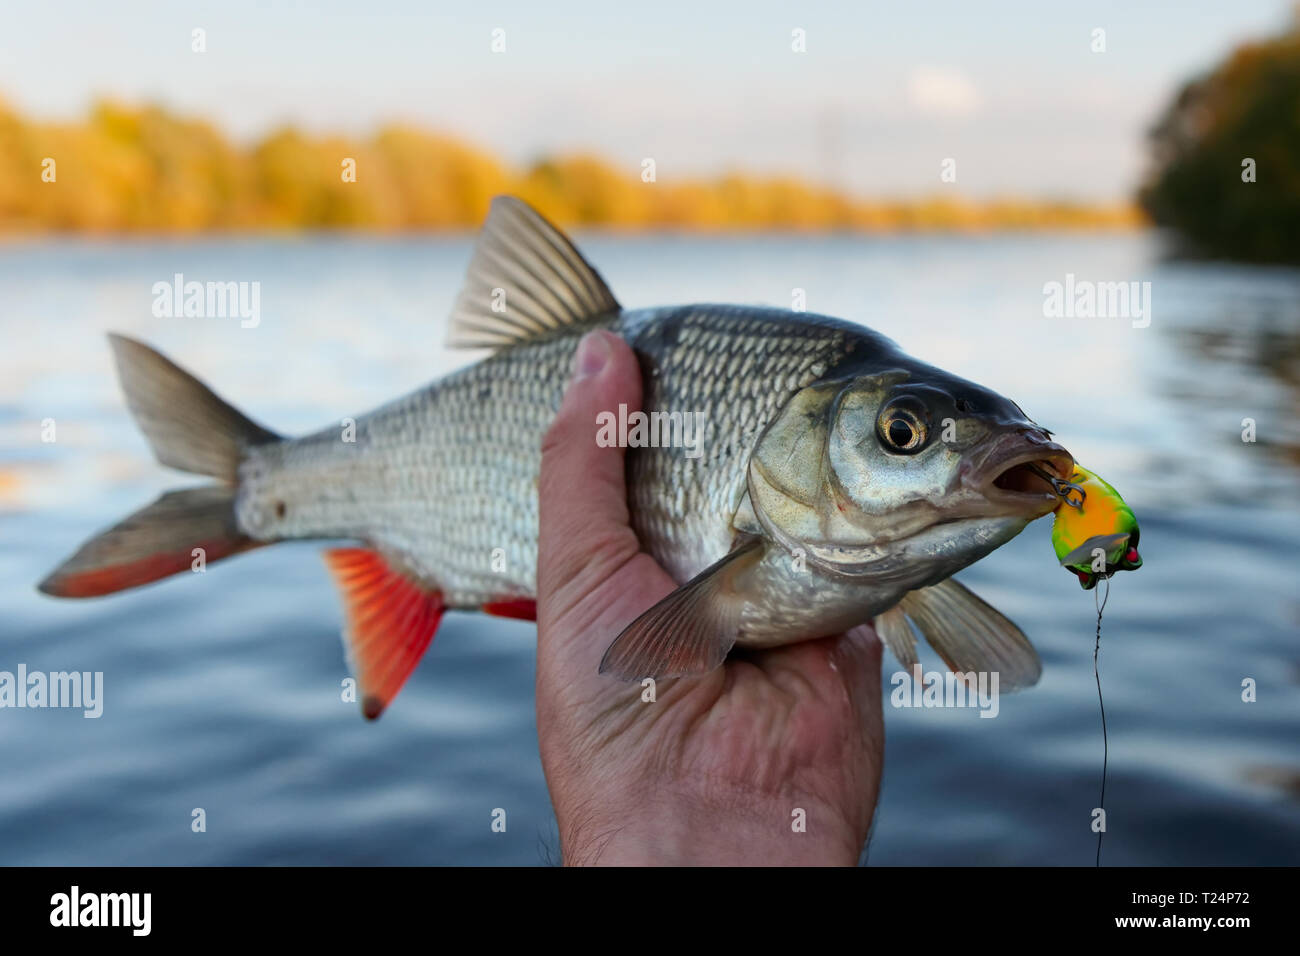 Orfe fish in fisherman's hand, toned image Stock Photo